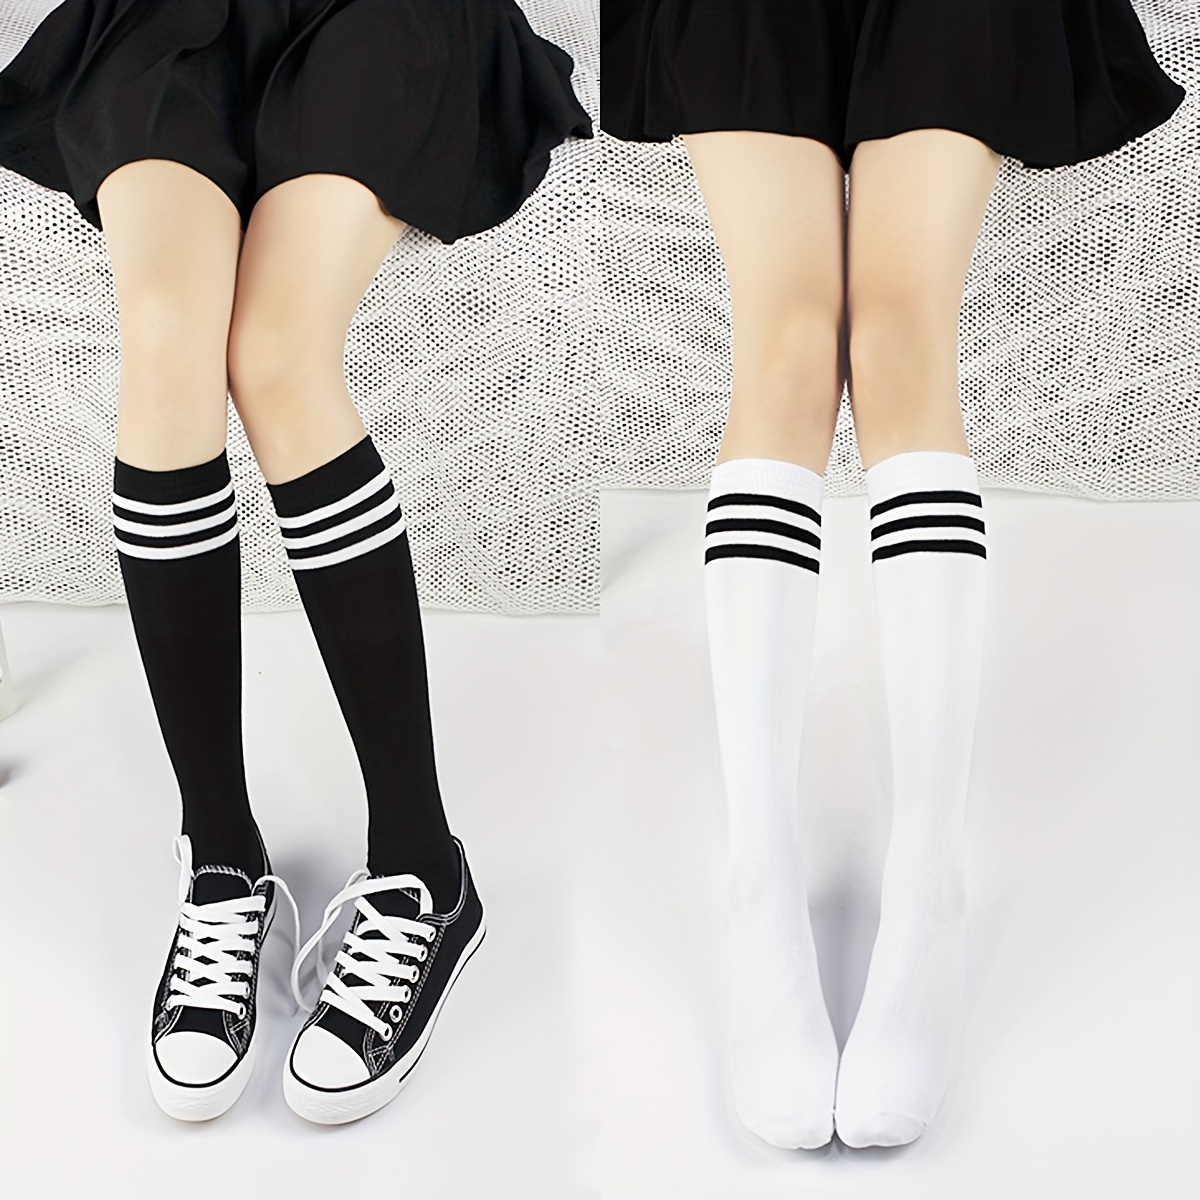 

2 Pairs Striped Trim Calf Socks, Casual Comfy Sports Knee High Socks, Women's Stockings & Hosiery